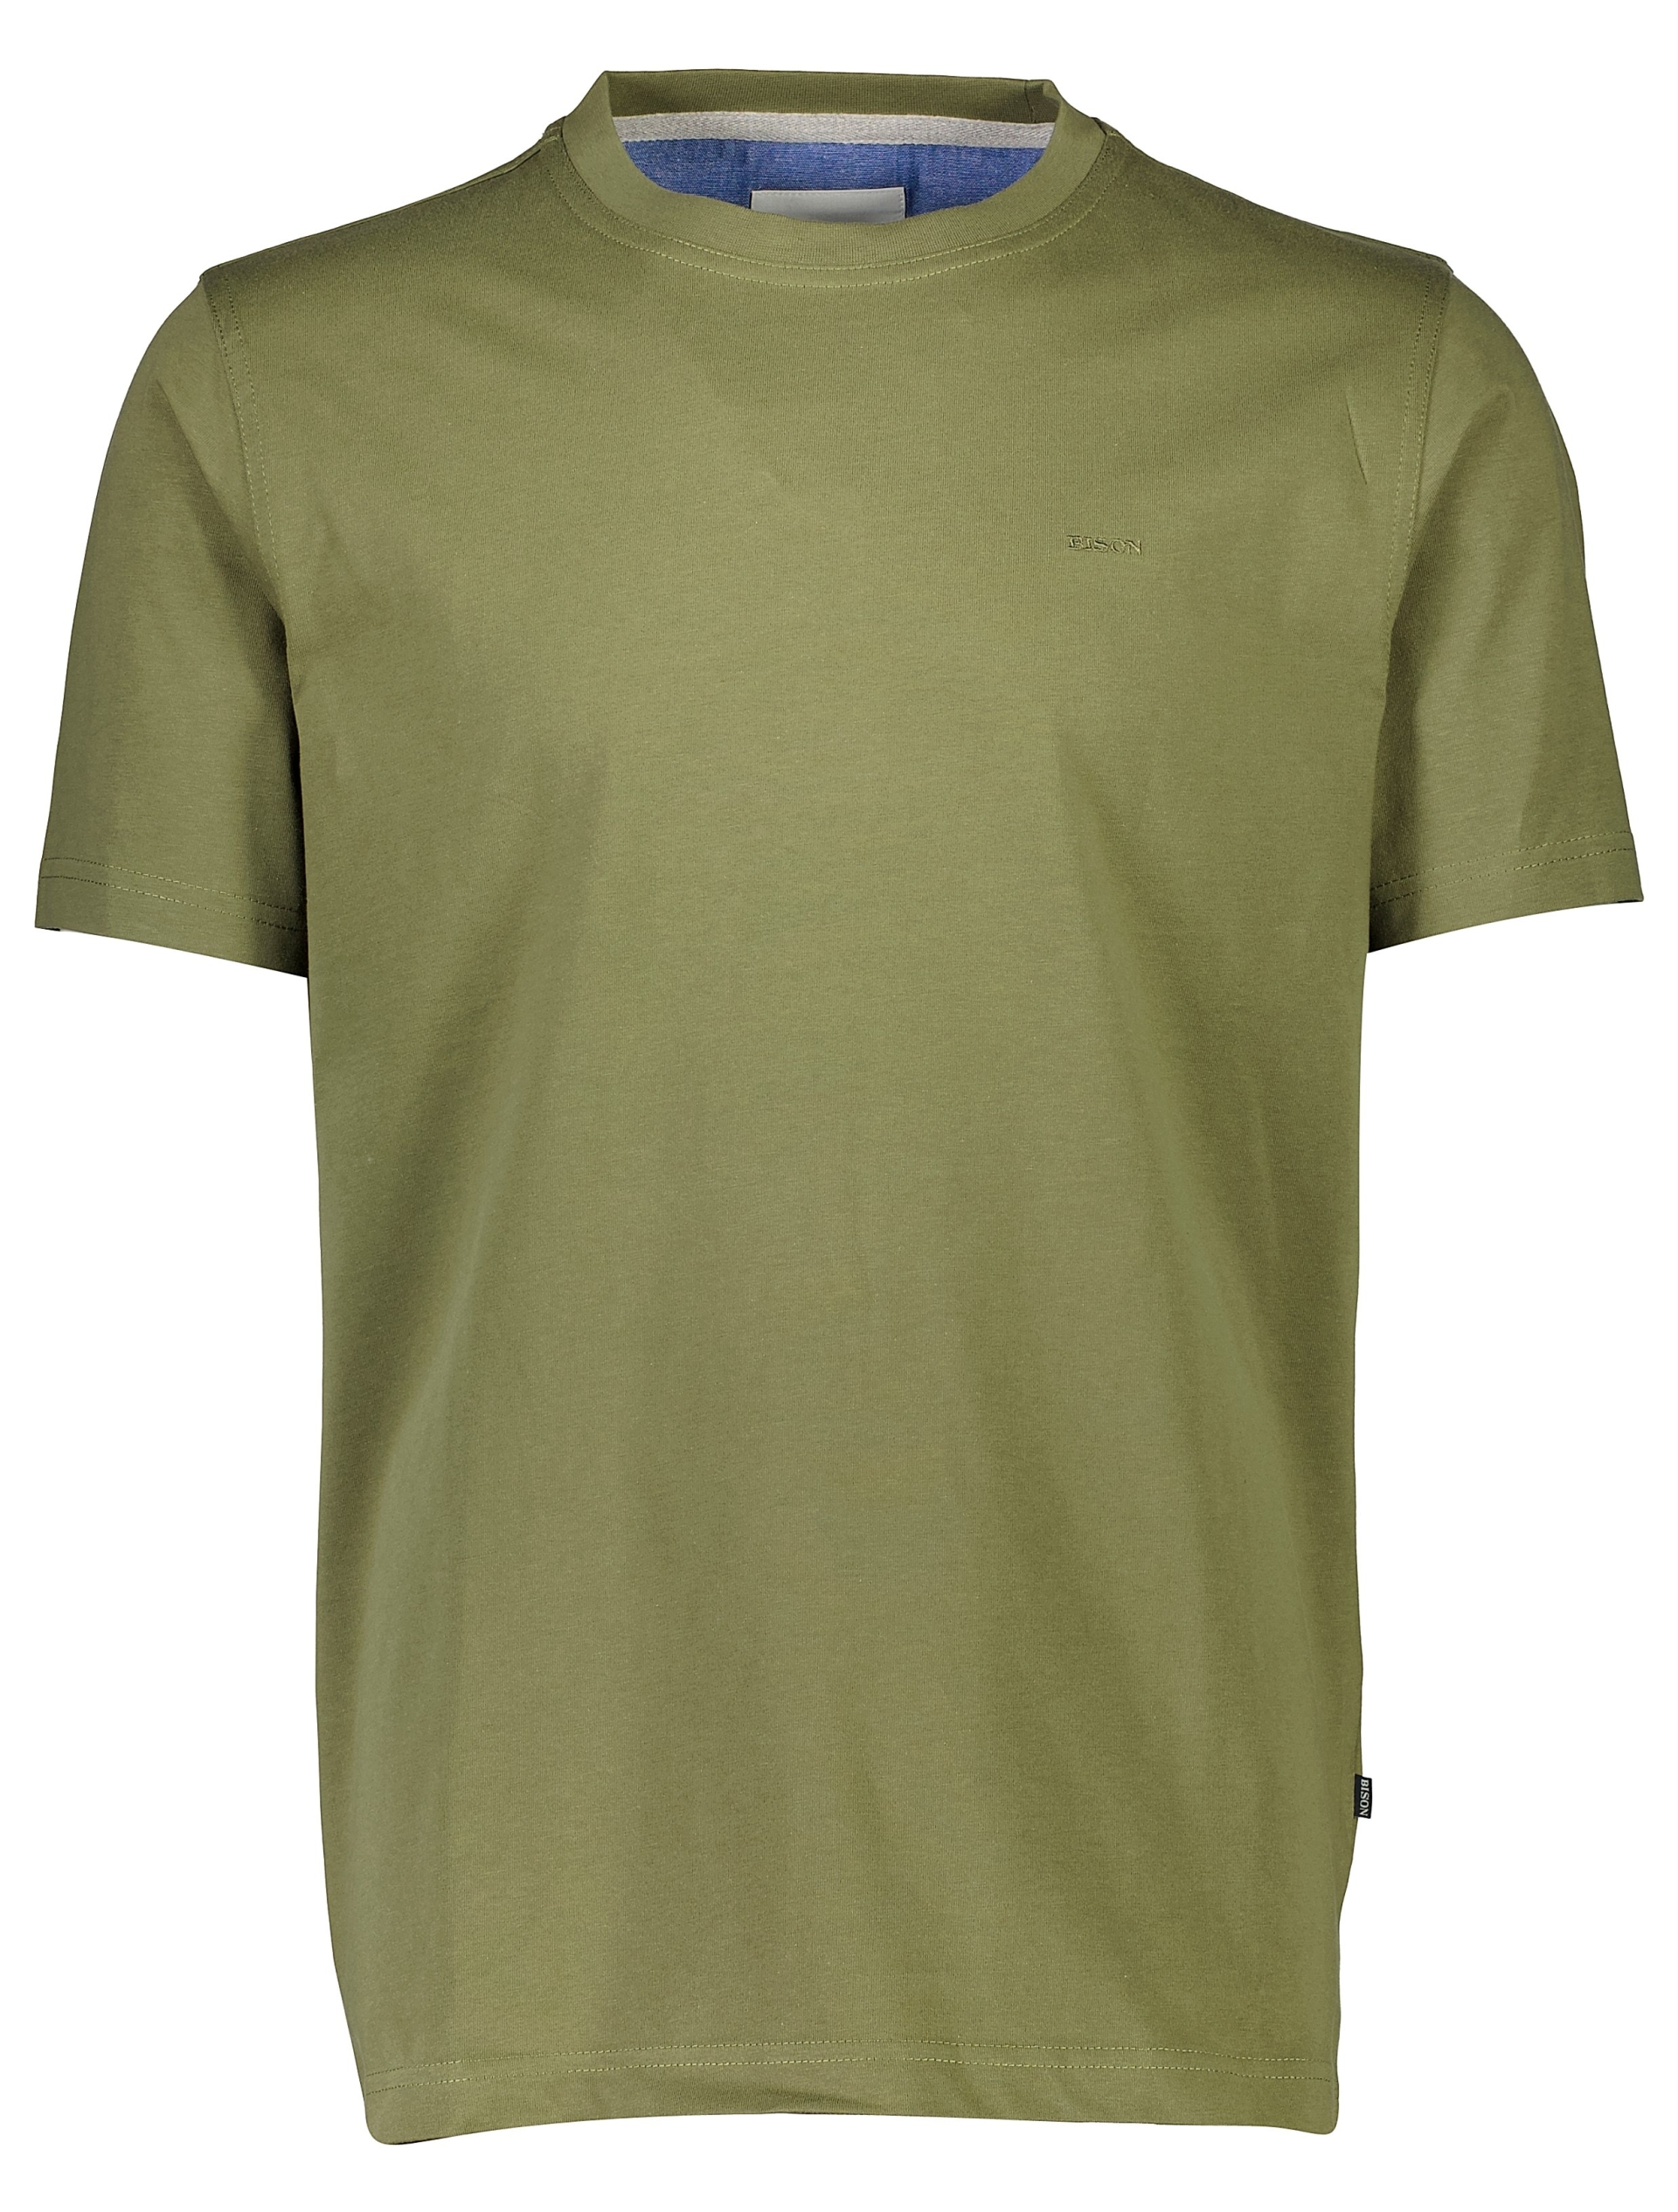 Bison T-shirt grøn / green 223